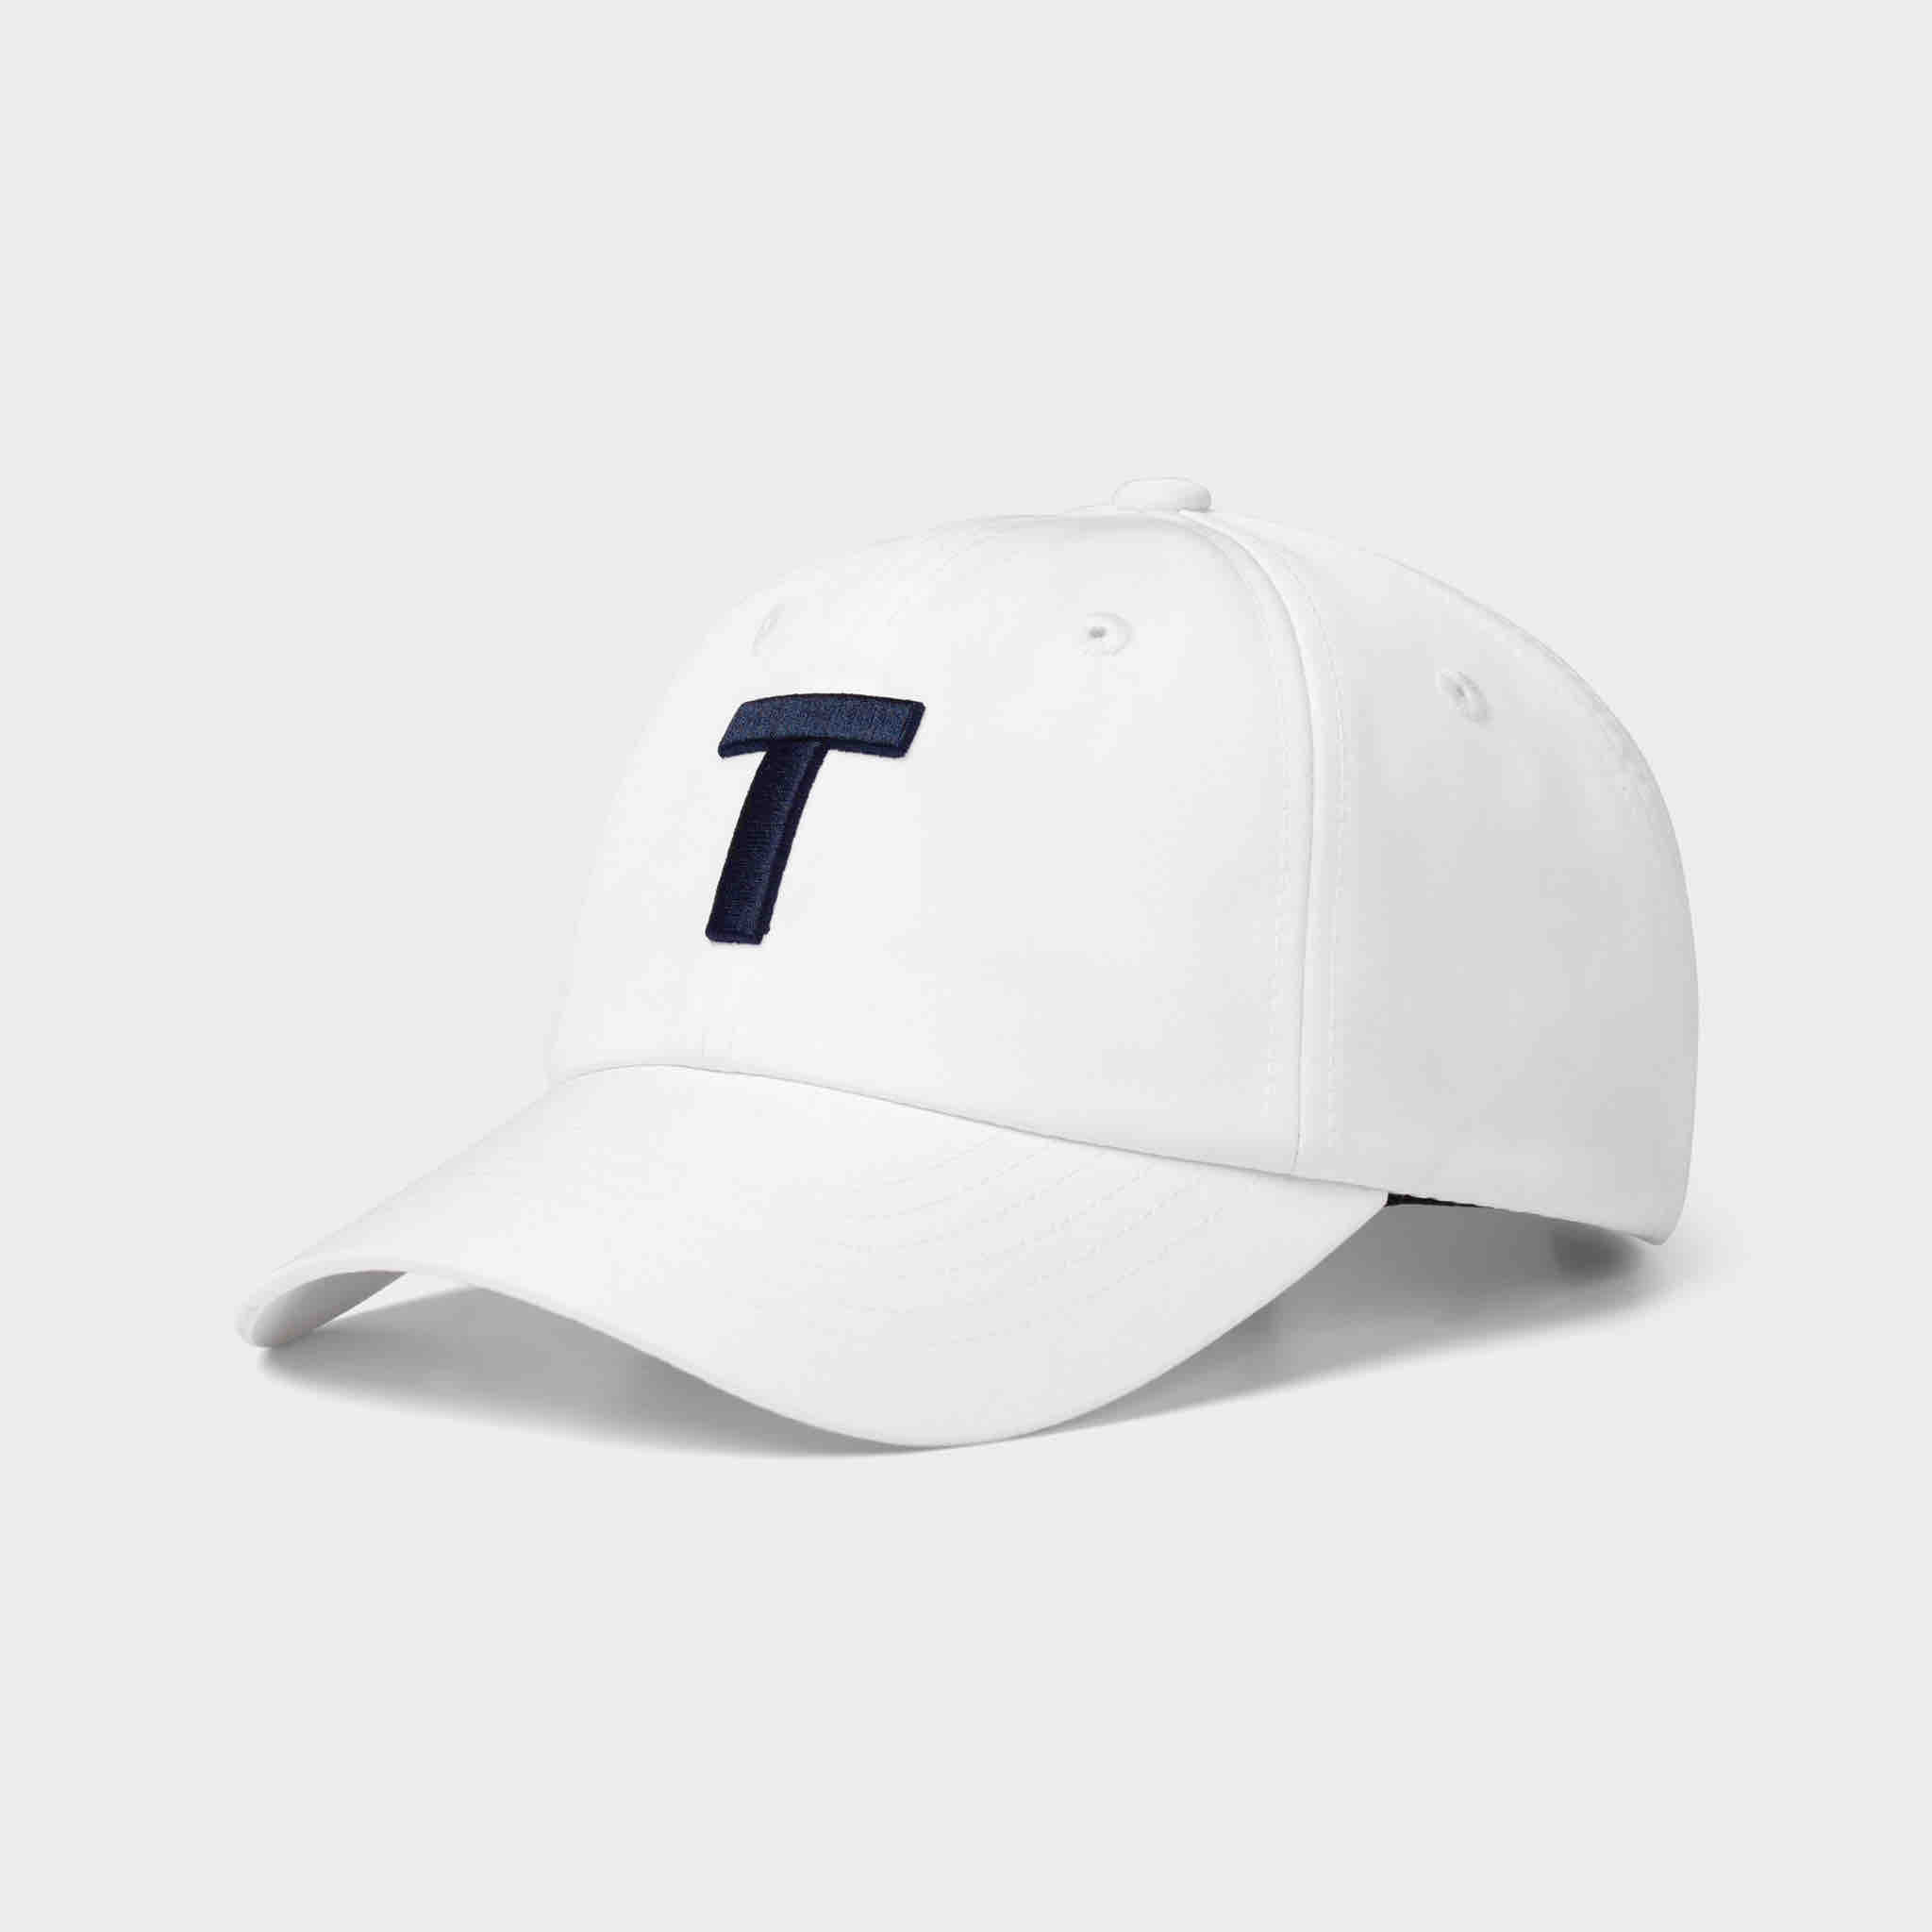 Tilley T Golf Cap - White - Size L/XL